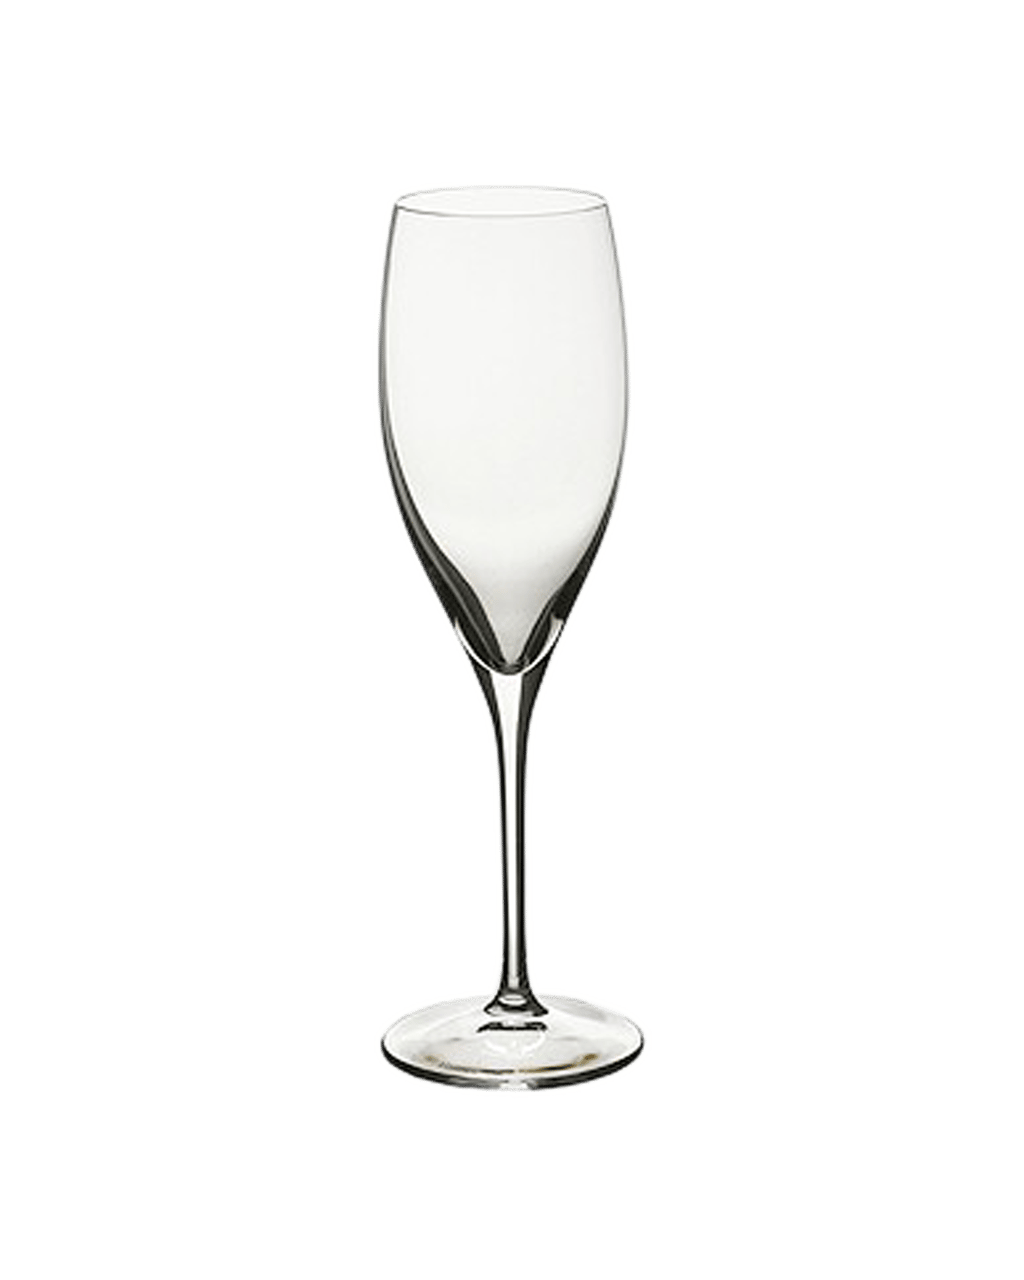 Riedel Vinum Cuvee Prestige Glass - 2 count